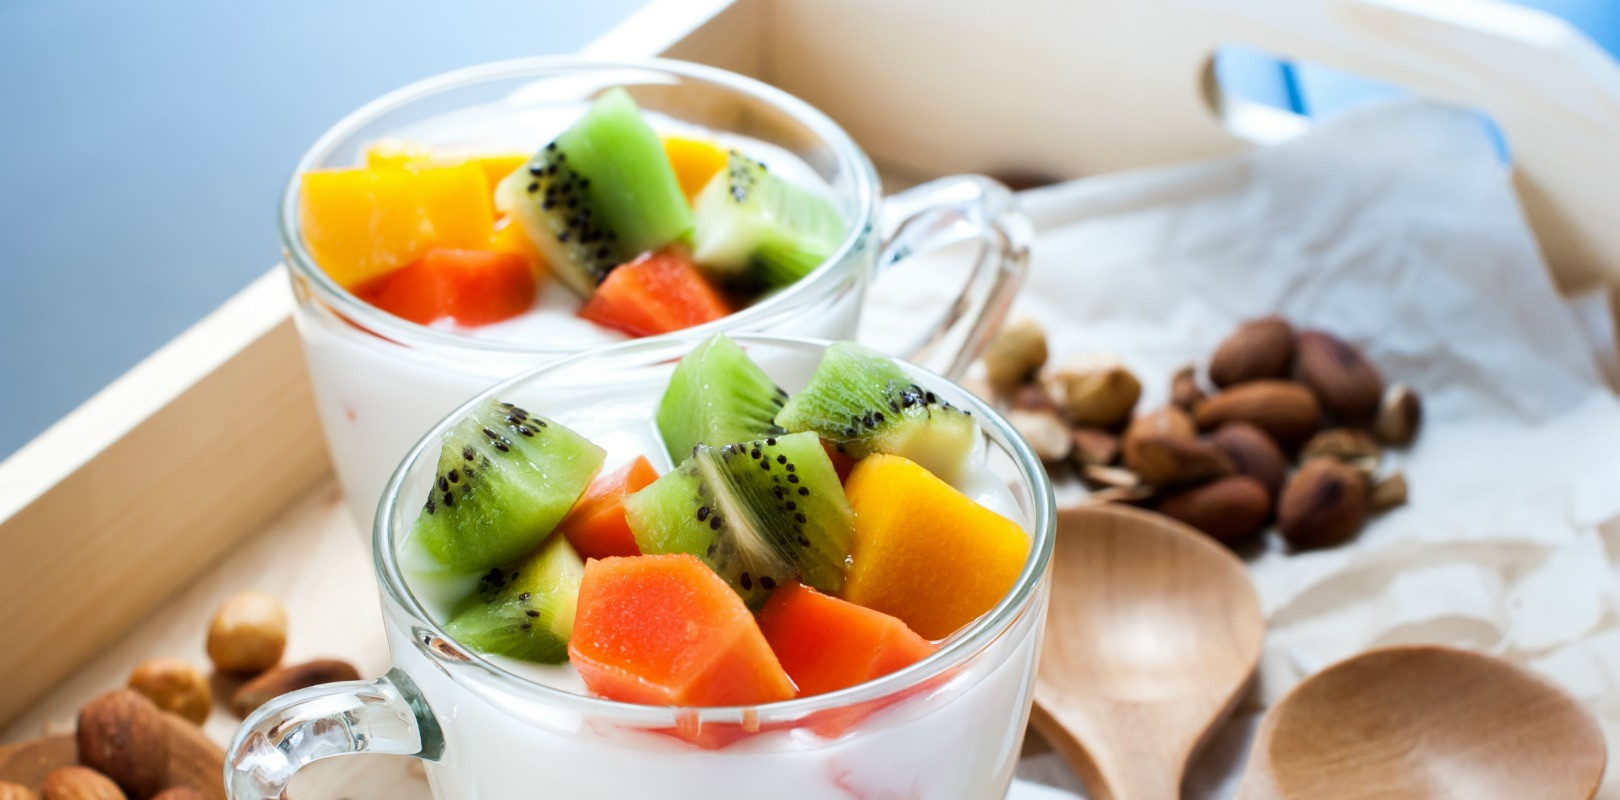 Healthy Fulfilling Snacks
 bine food with yogurt for a satisfying snack Yogurt